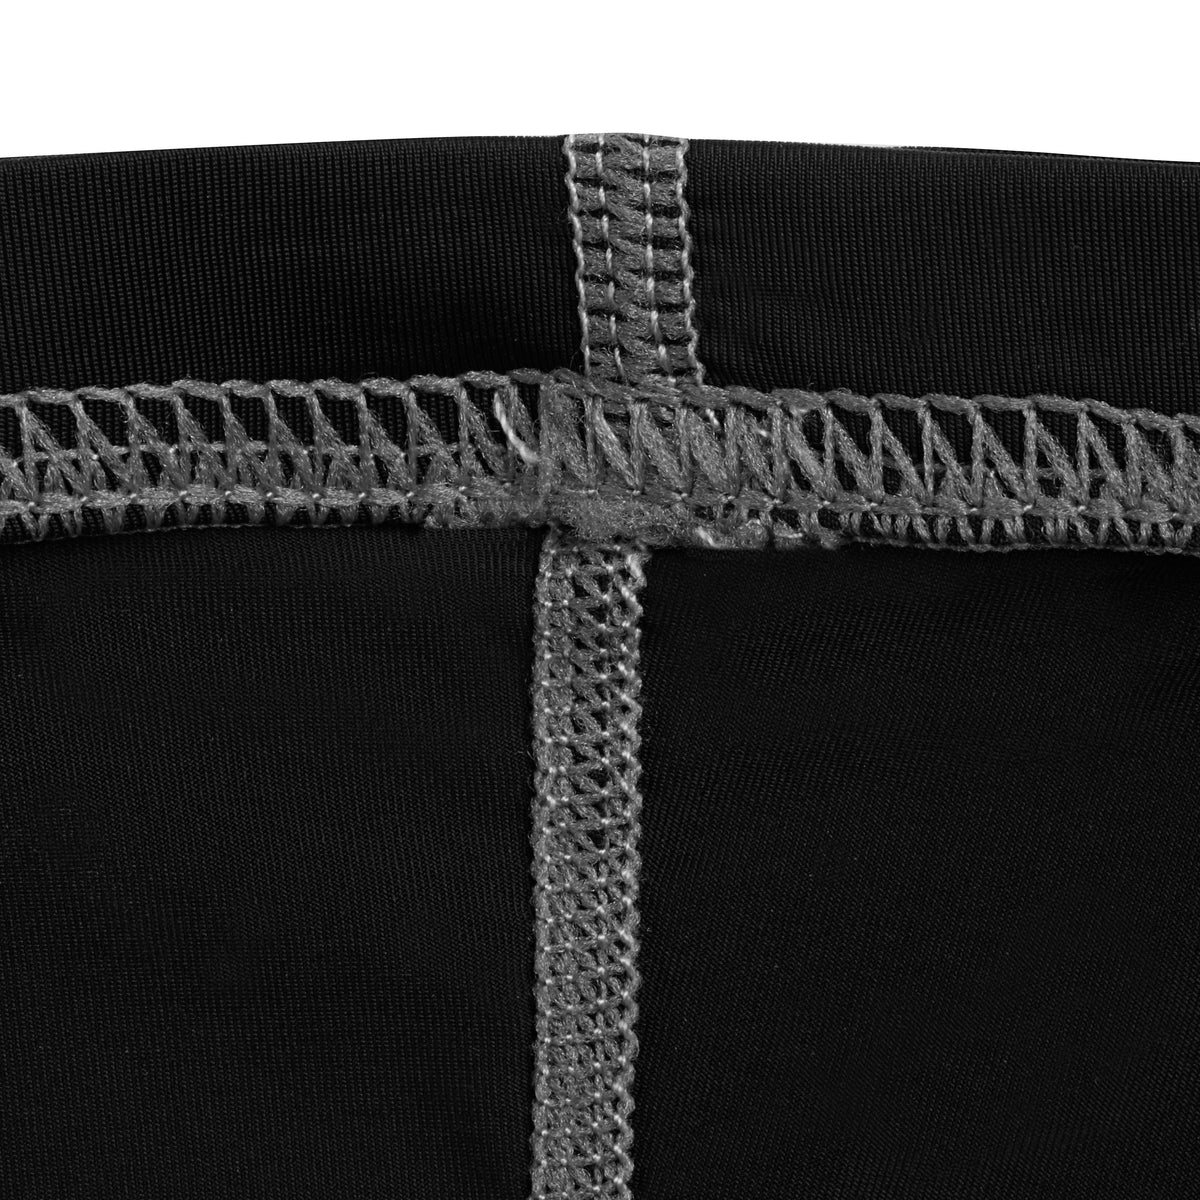 Fila Compression Arm Sleeve inside stitching